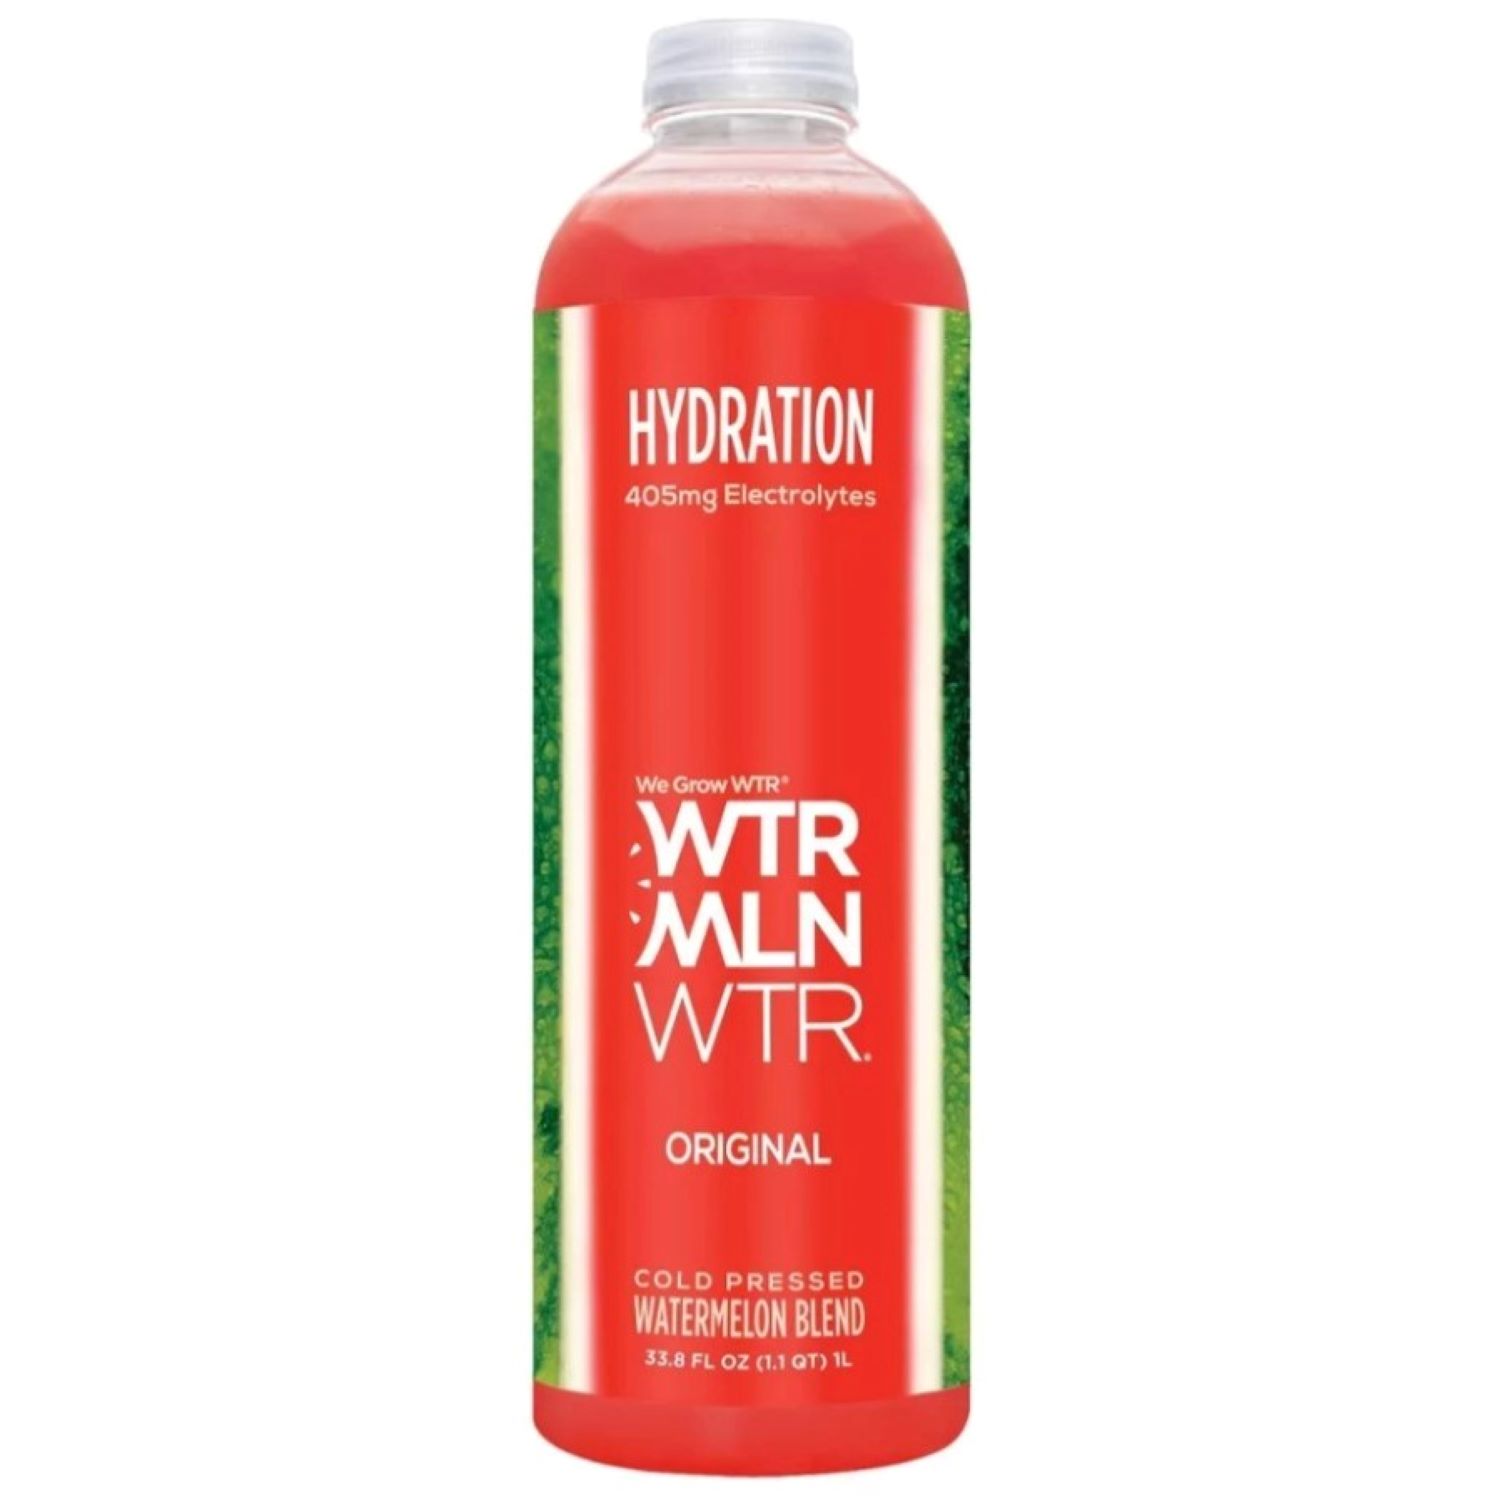 WTRMLN WTR Original Cold Pressed Juiced Watermelon, 33.8 fl oz - image 1 of 7